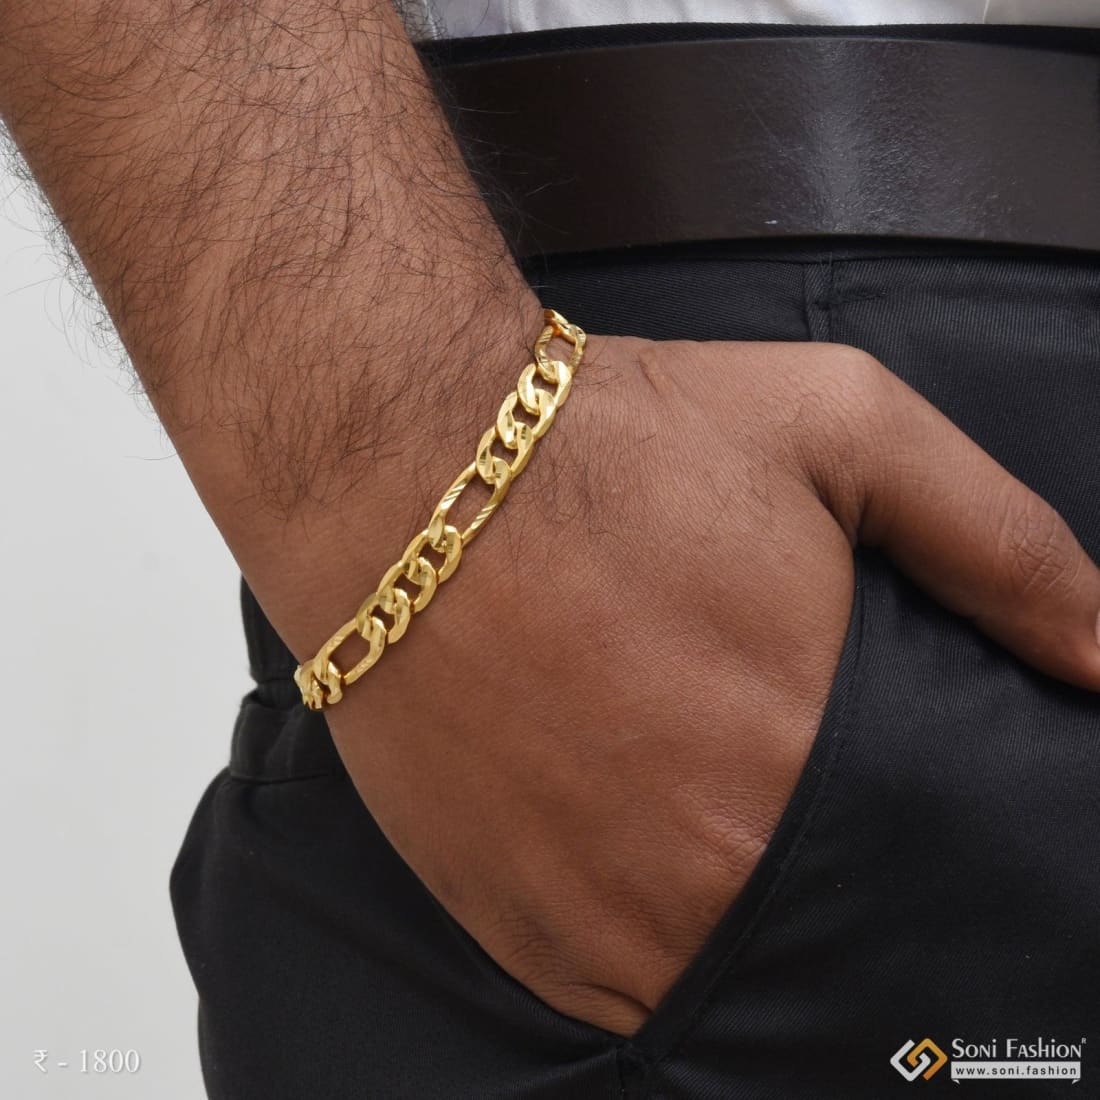 Sachin Best Quality Attractive Design Gold Plated Bracelet For Men - Style  C709 at Rs 650.00 | गोल्ड प्लेटेड ब्रेसलेट - Soni Fashion, Rajkot | ID:  2852841917291